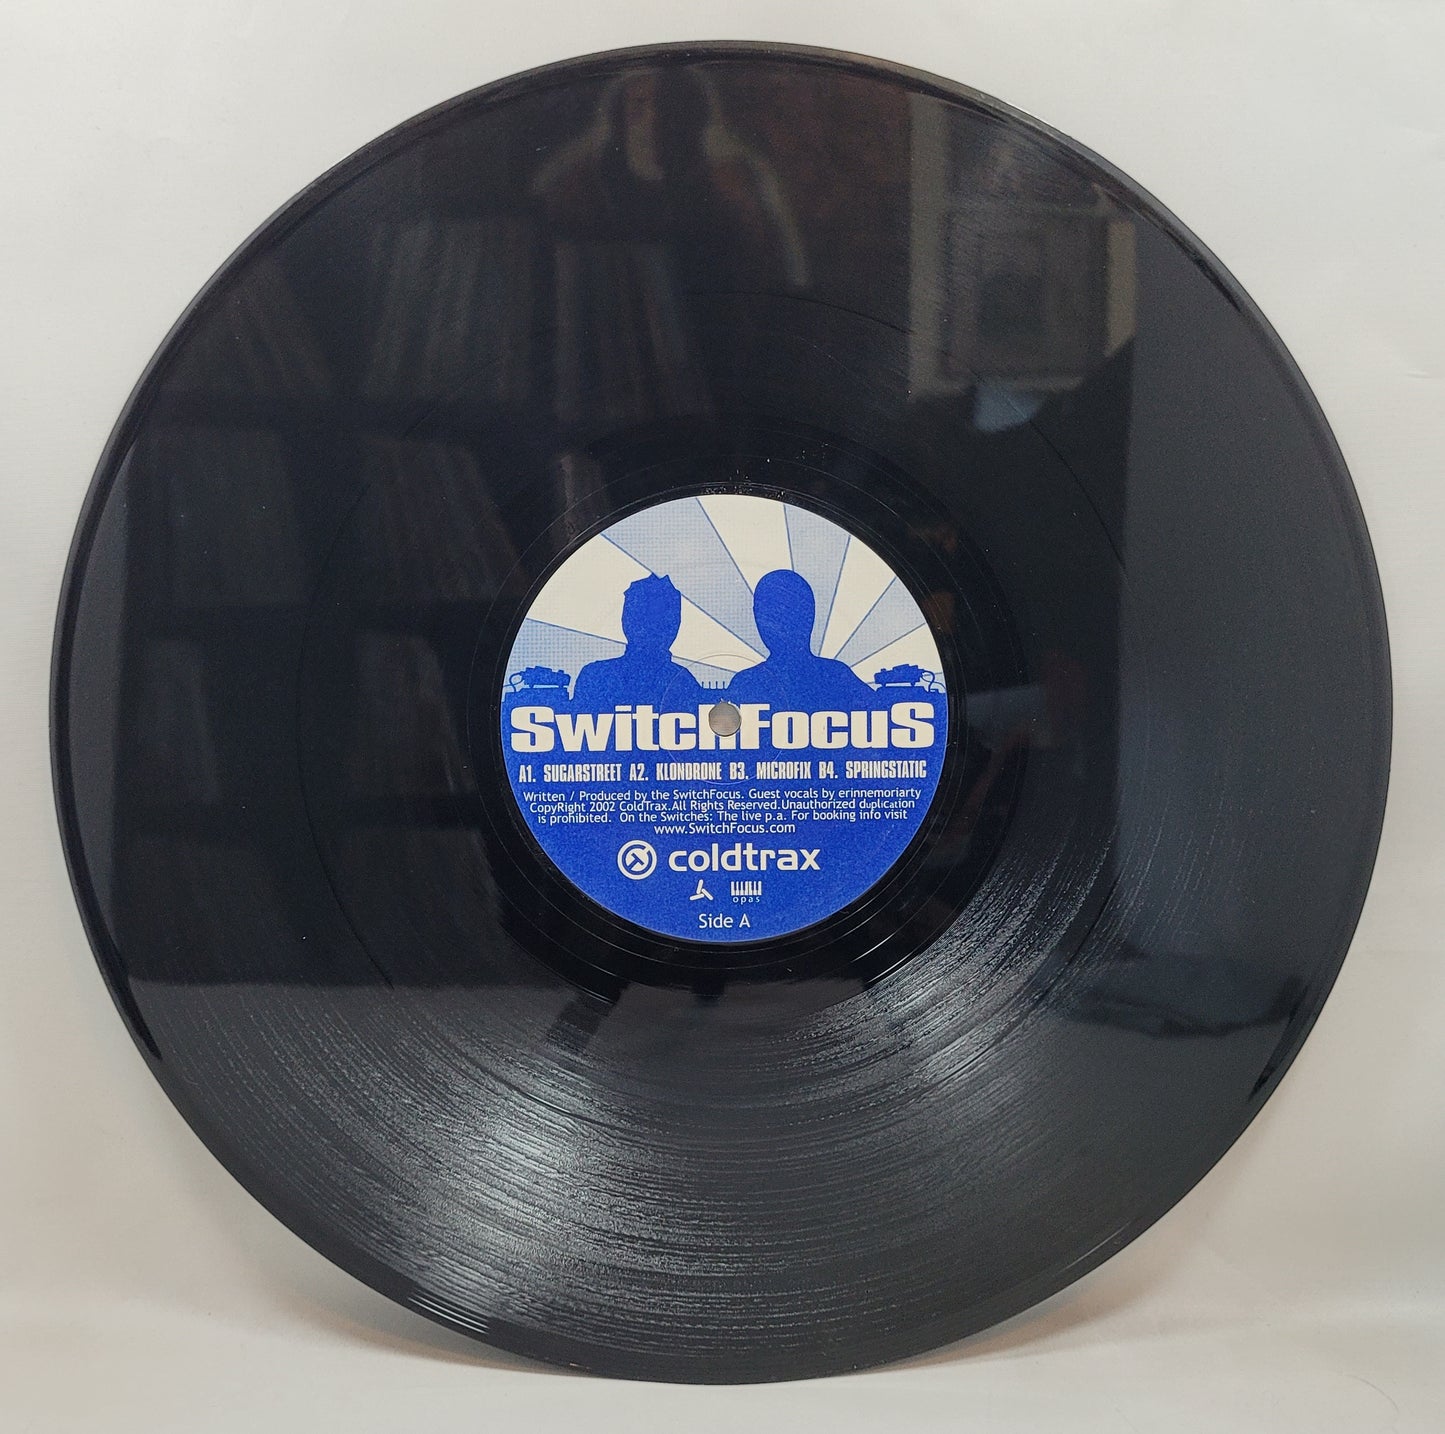 SwitchFocus - SwitchFocus [Vinyl Record 12" Single]